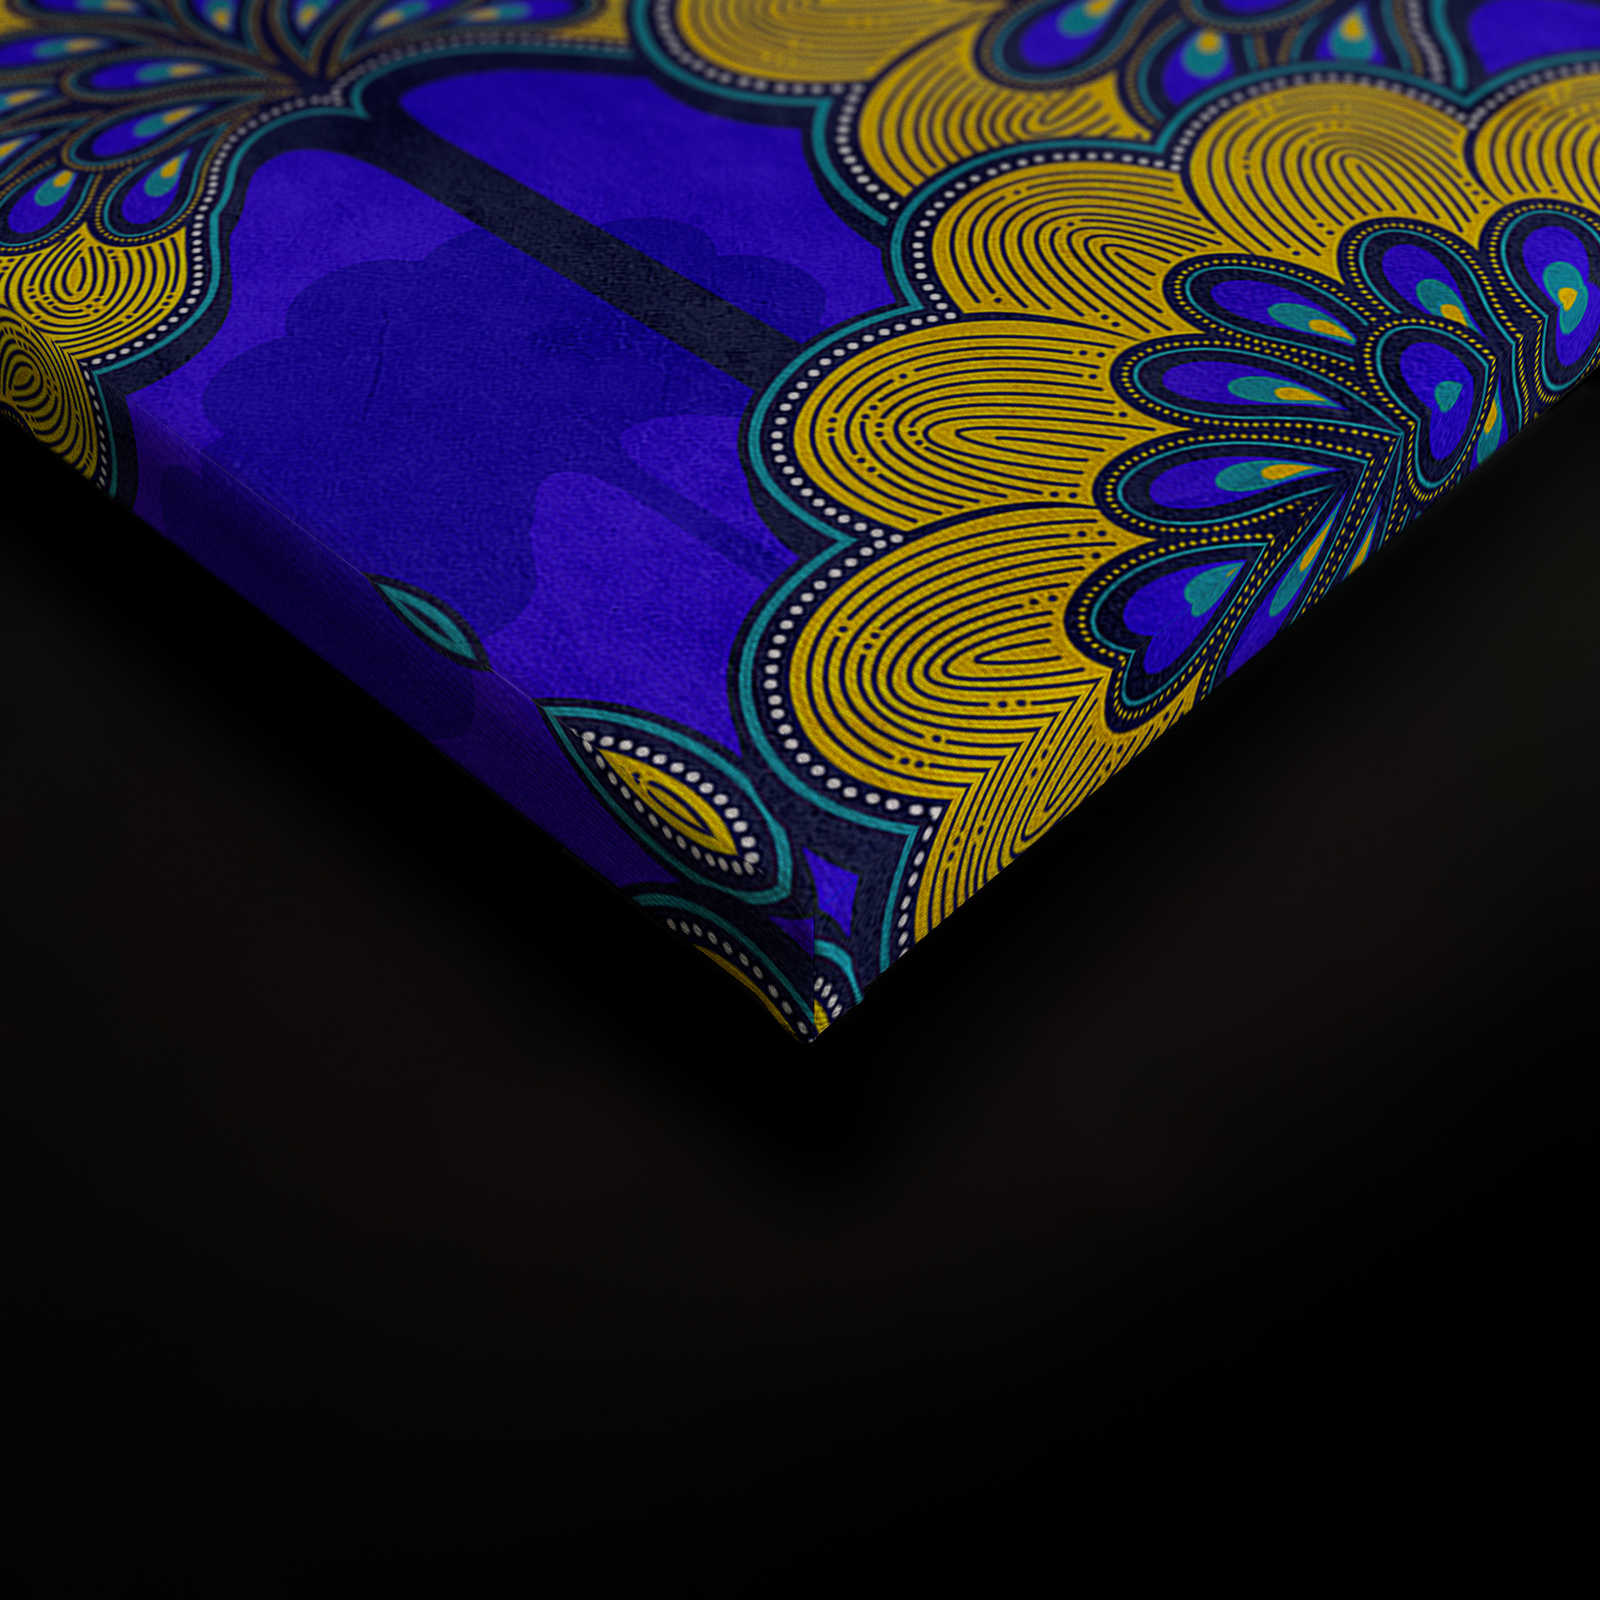             Dakar 1 - Quadro su tela in tessuto africano con motivi blu e gialli - 1,20 m x 0,80 m
        